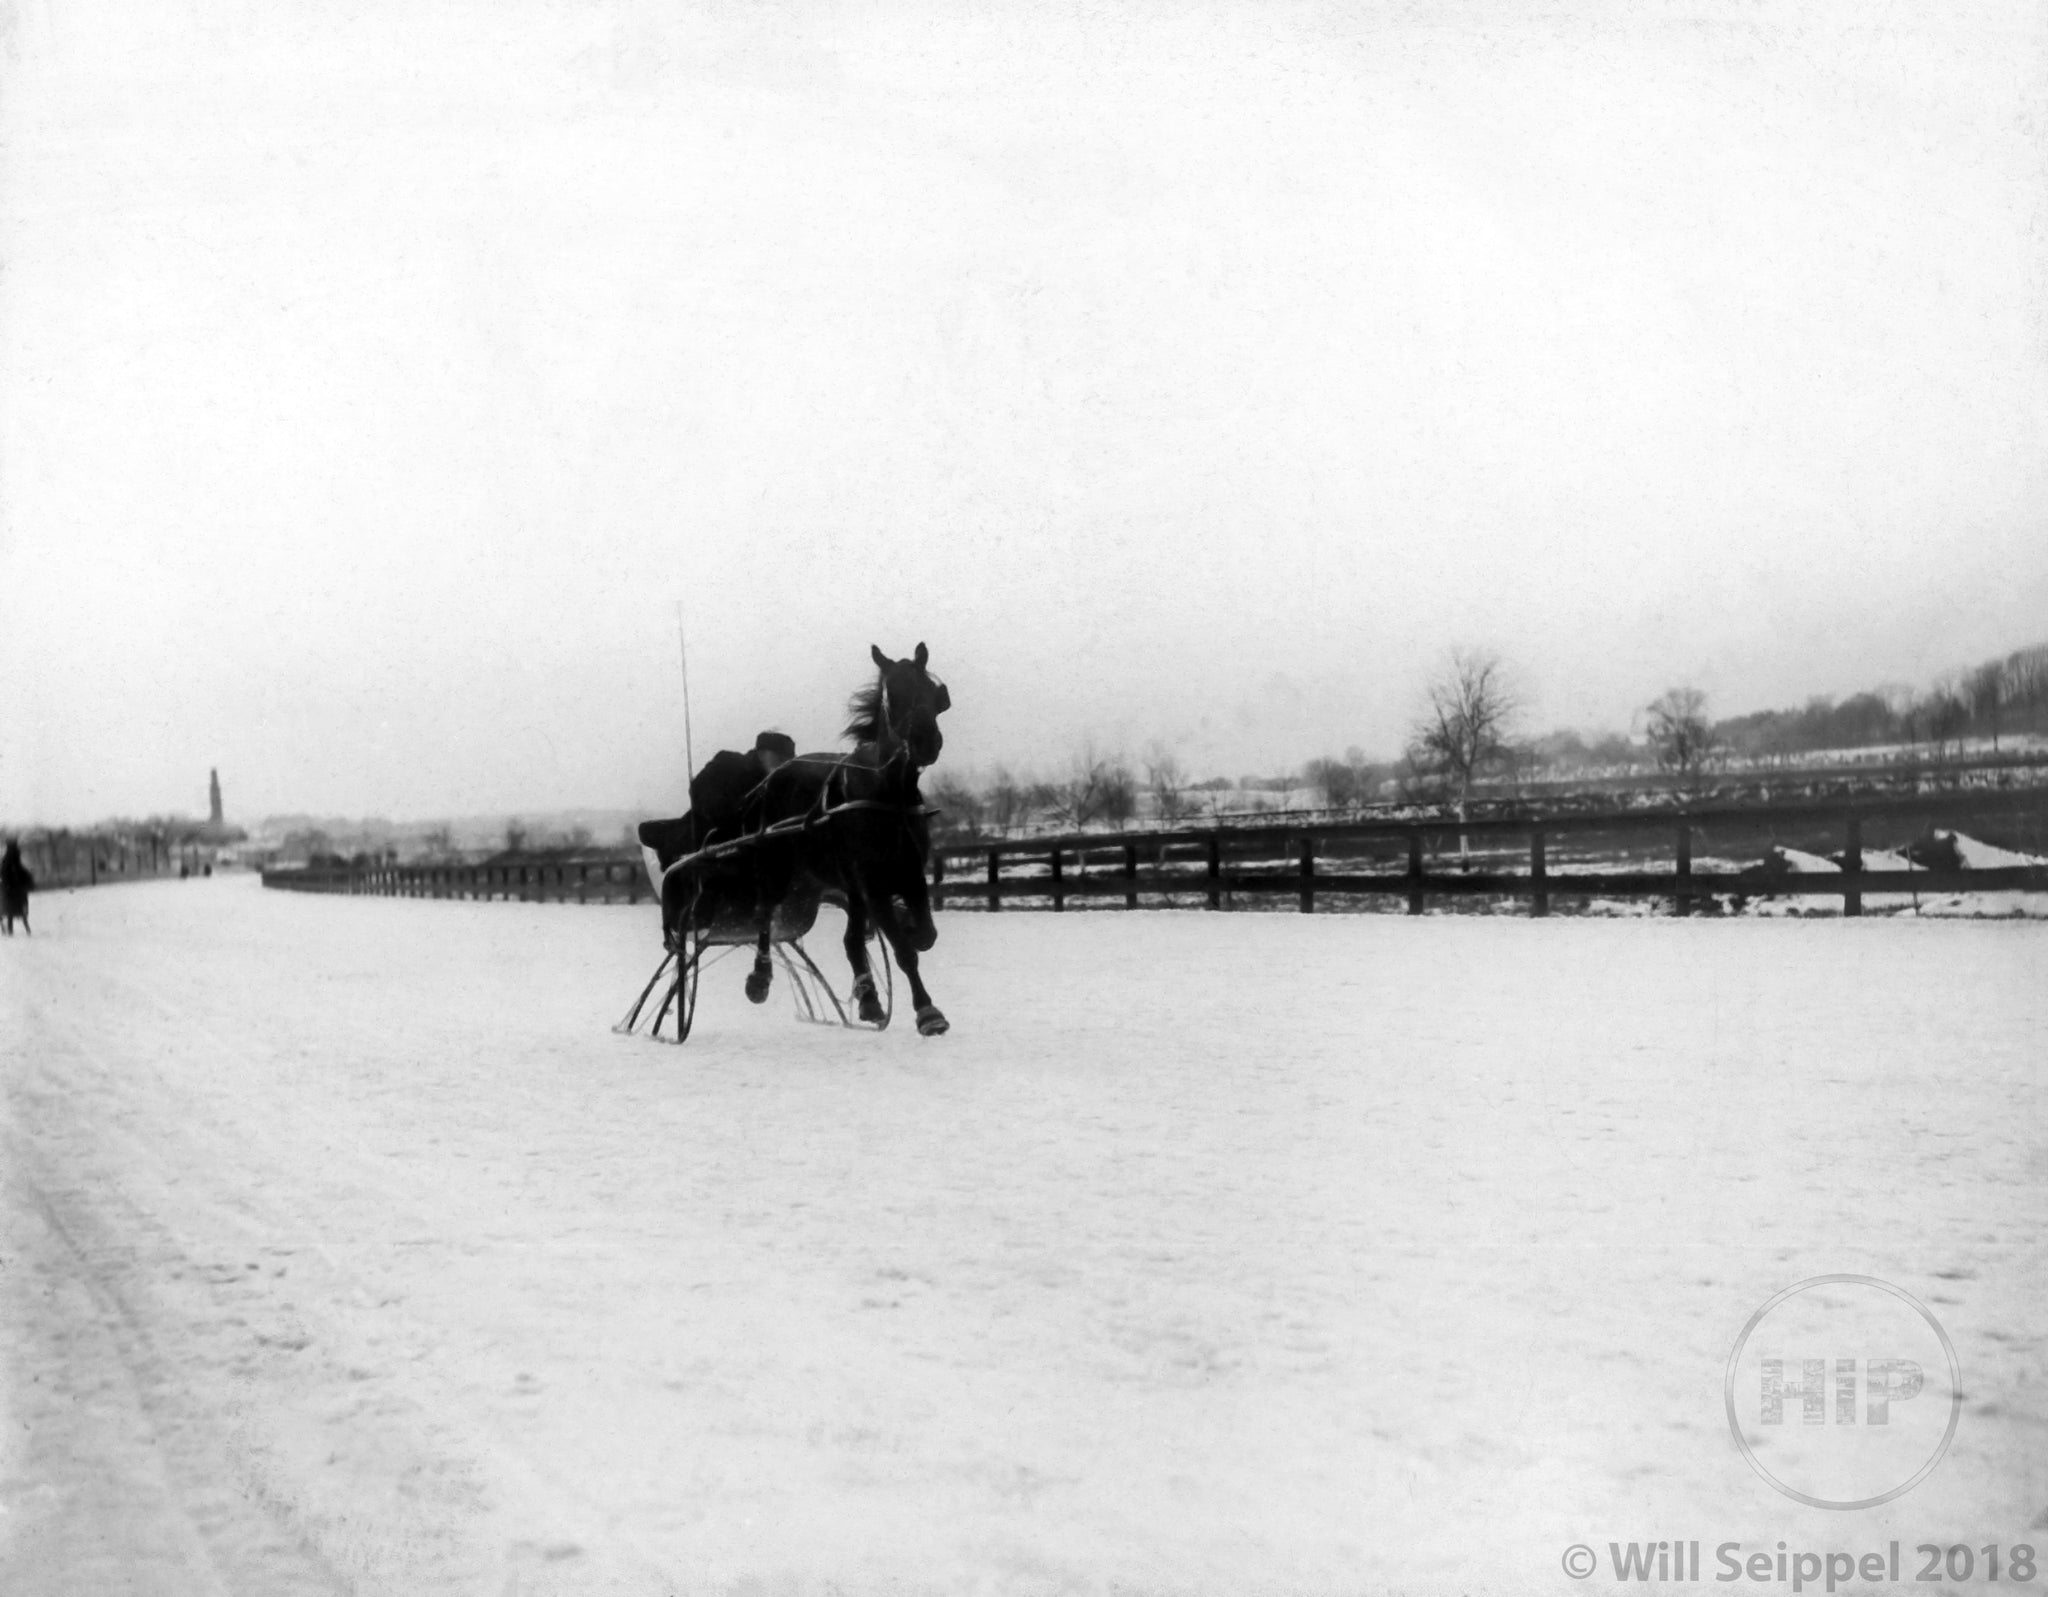 Sleigh Horse Briskly Trotting Along a Snowy Road in Winter c. 1923 ...